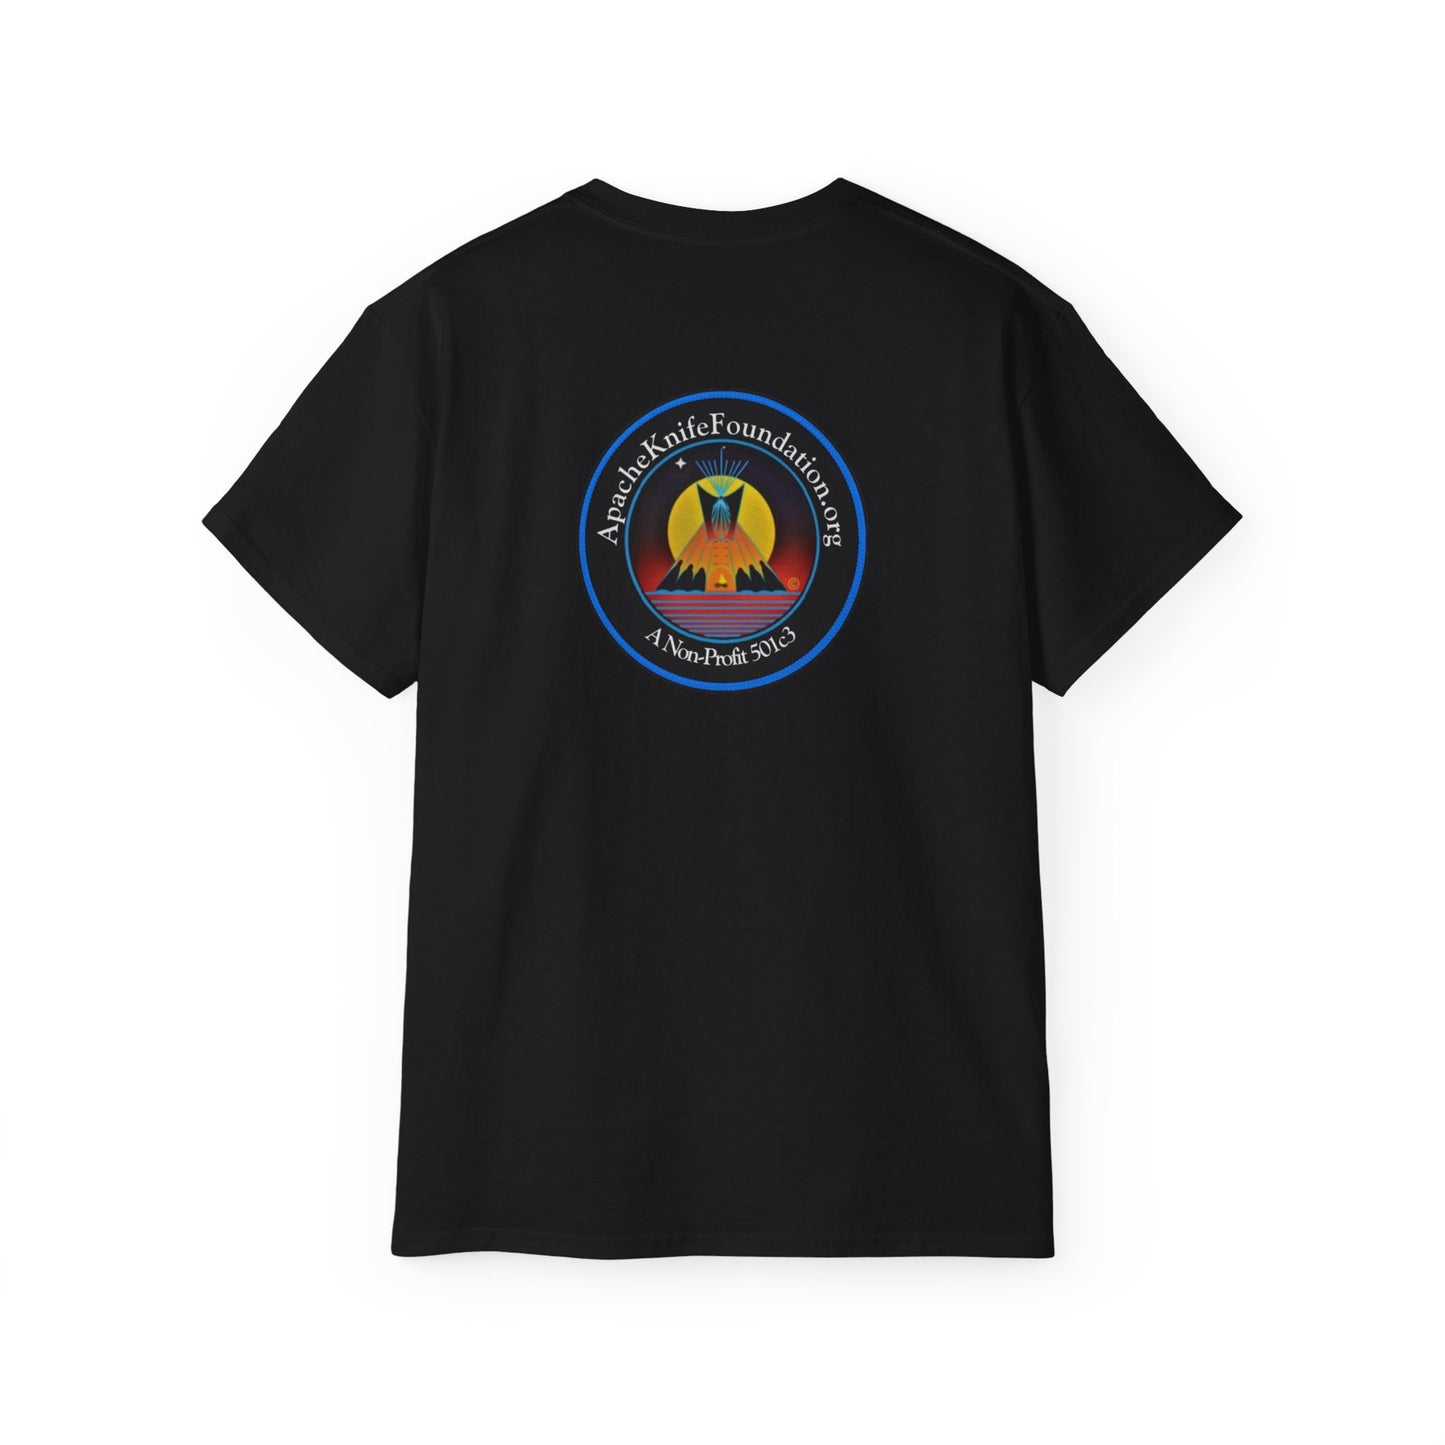 Camisa Apache Knife Foundation Nativo americano sin fines de lucro (pedido especial)